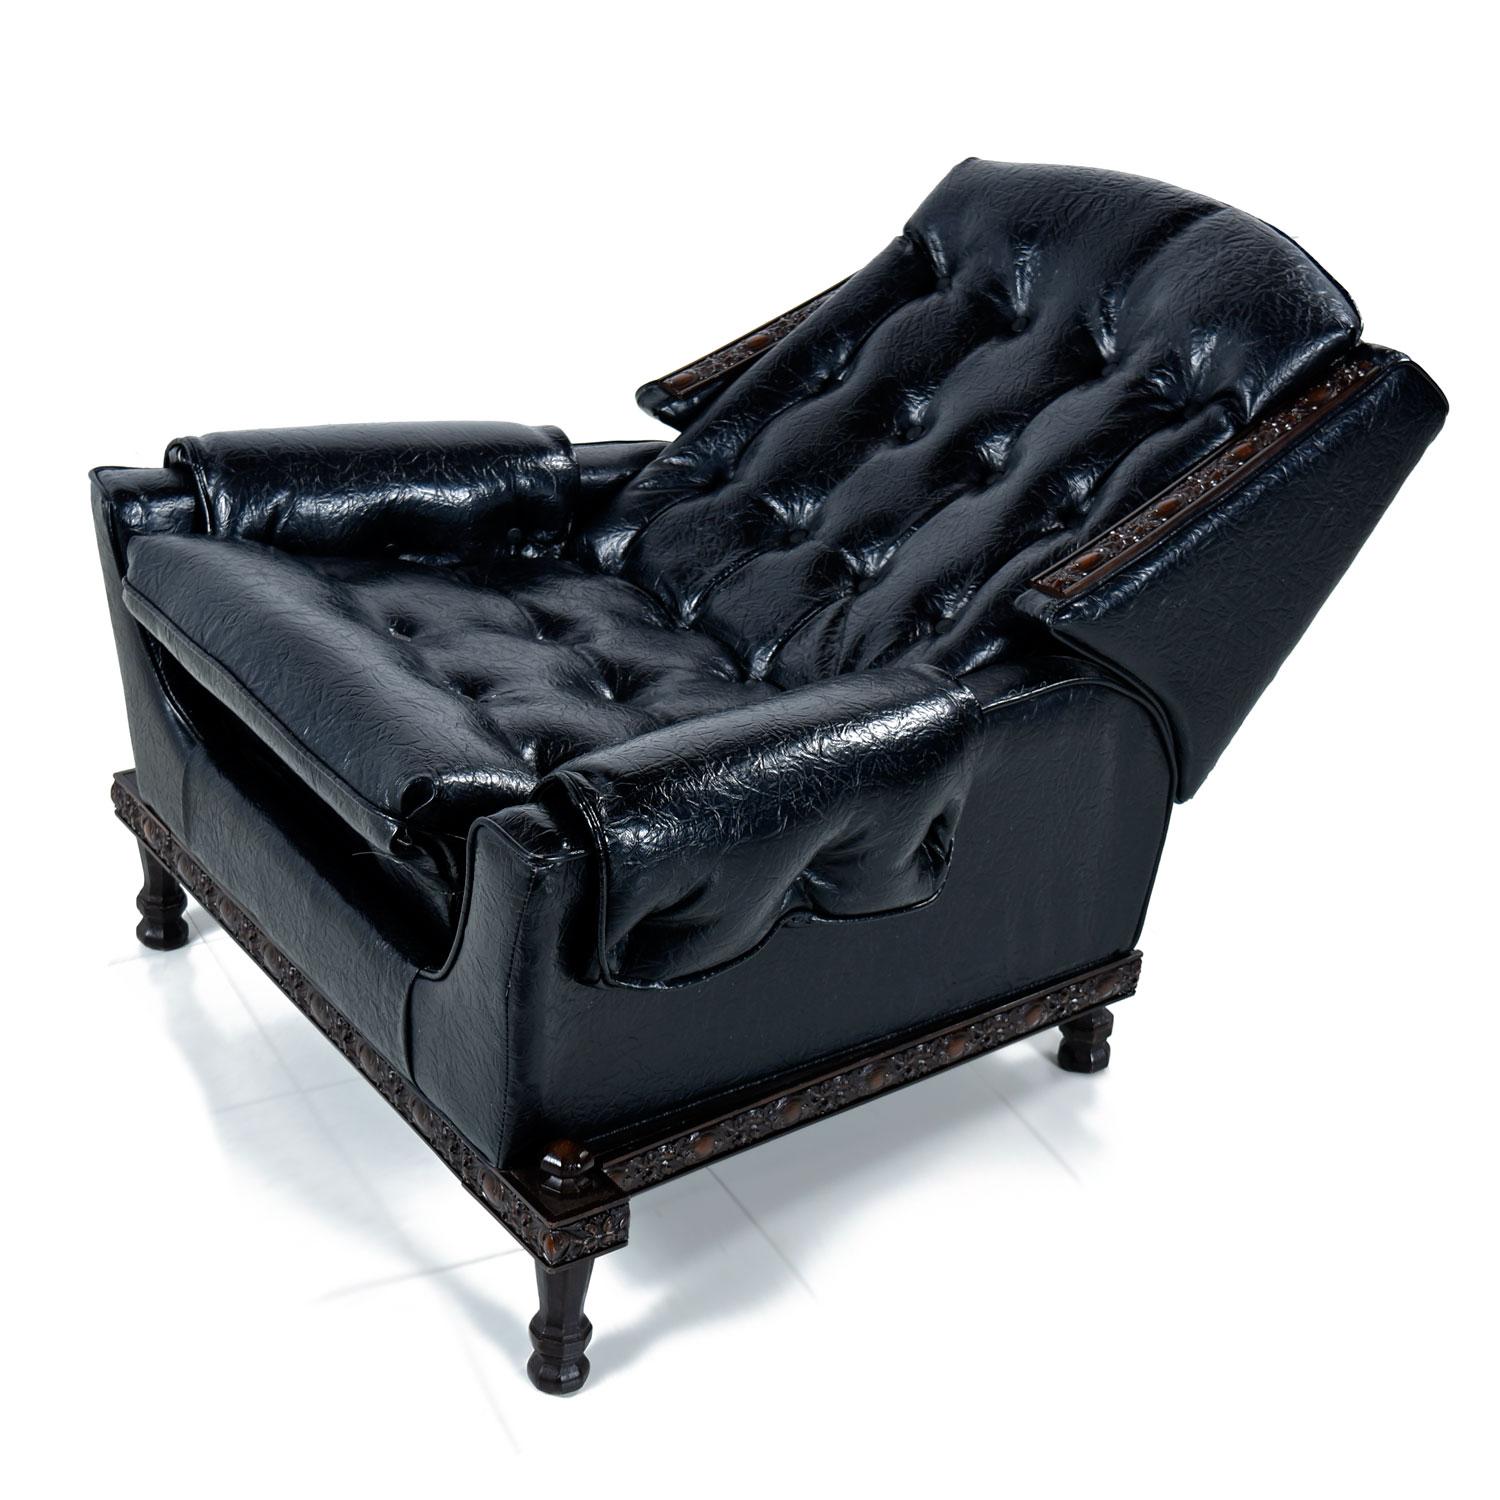 Spanish Meditteranean Style Black Tufted Vinyl Recliner Lounge Chair and Ottoman (amerikanisch)